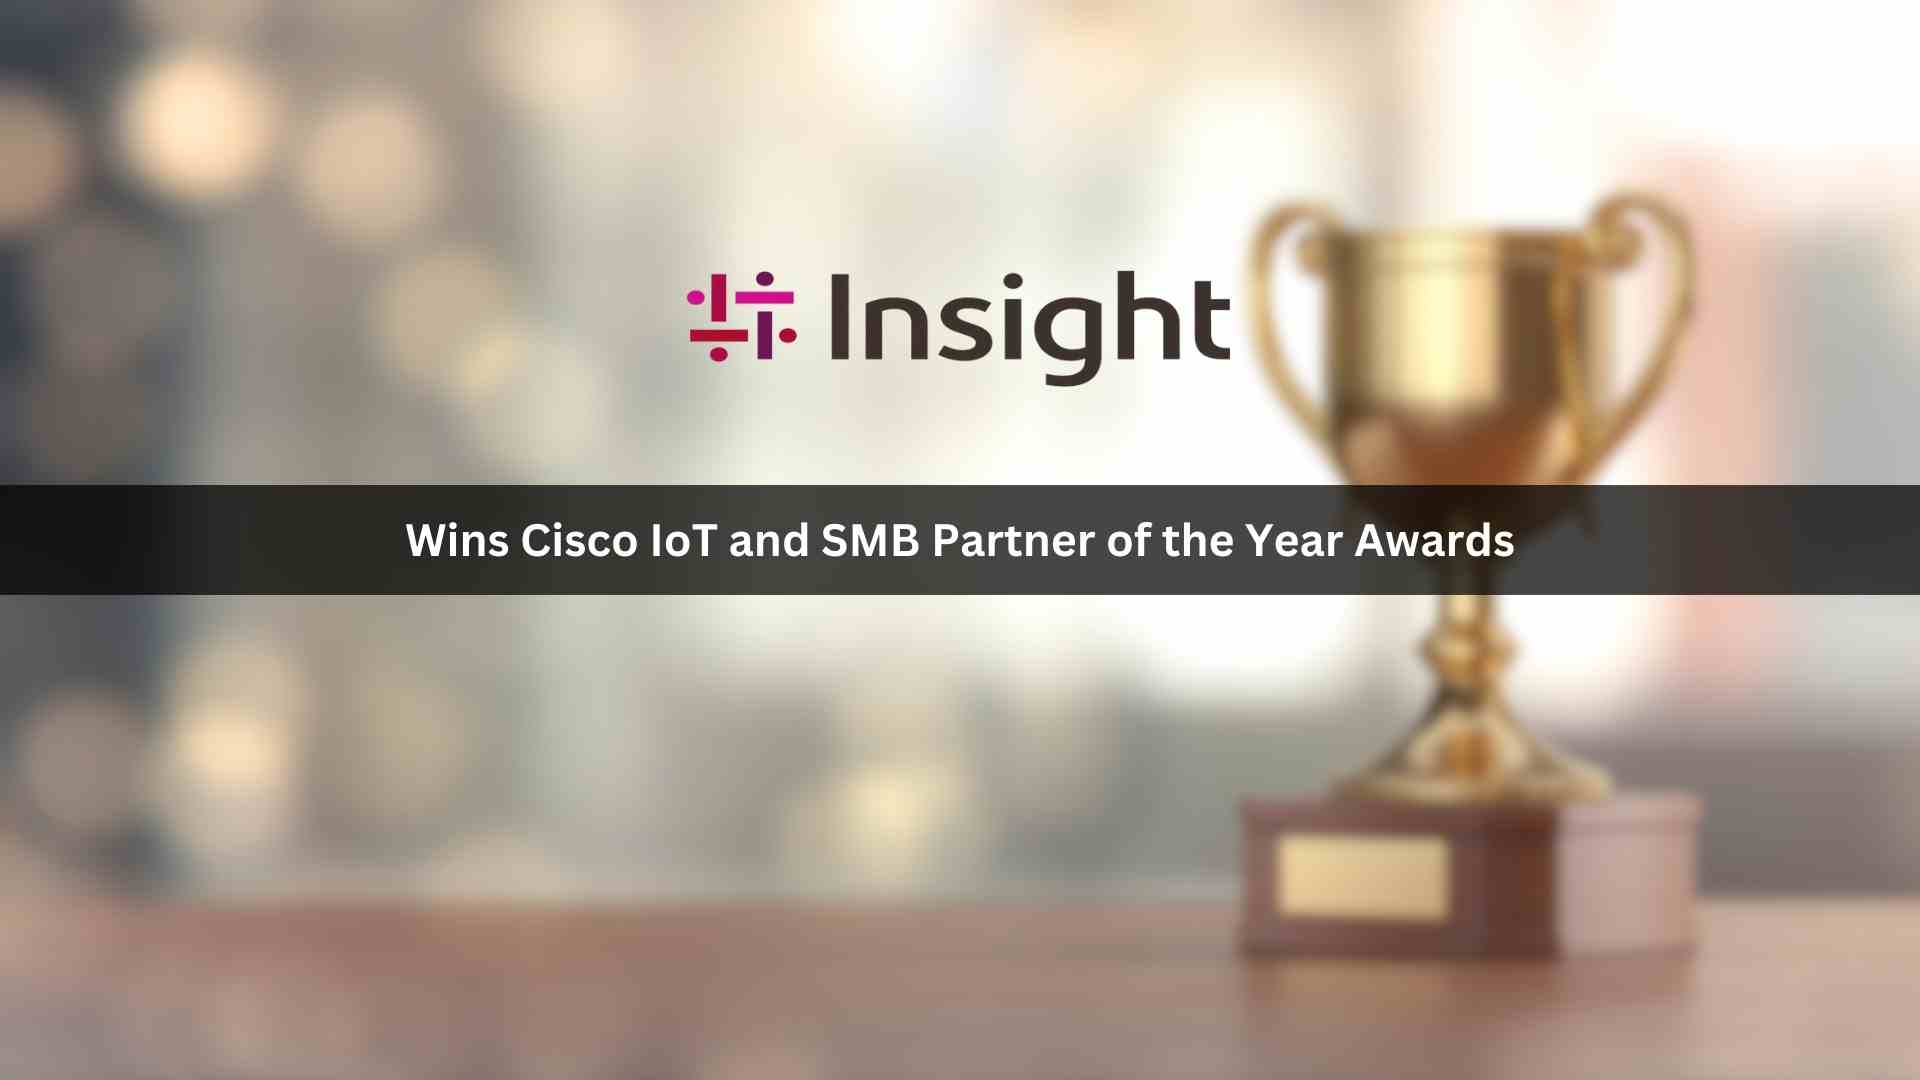 Insight Wins Cisco IoT and SMB Partner of the Year Awards